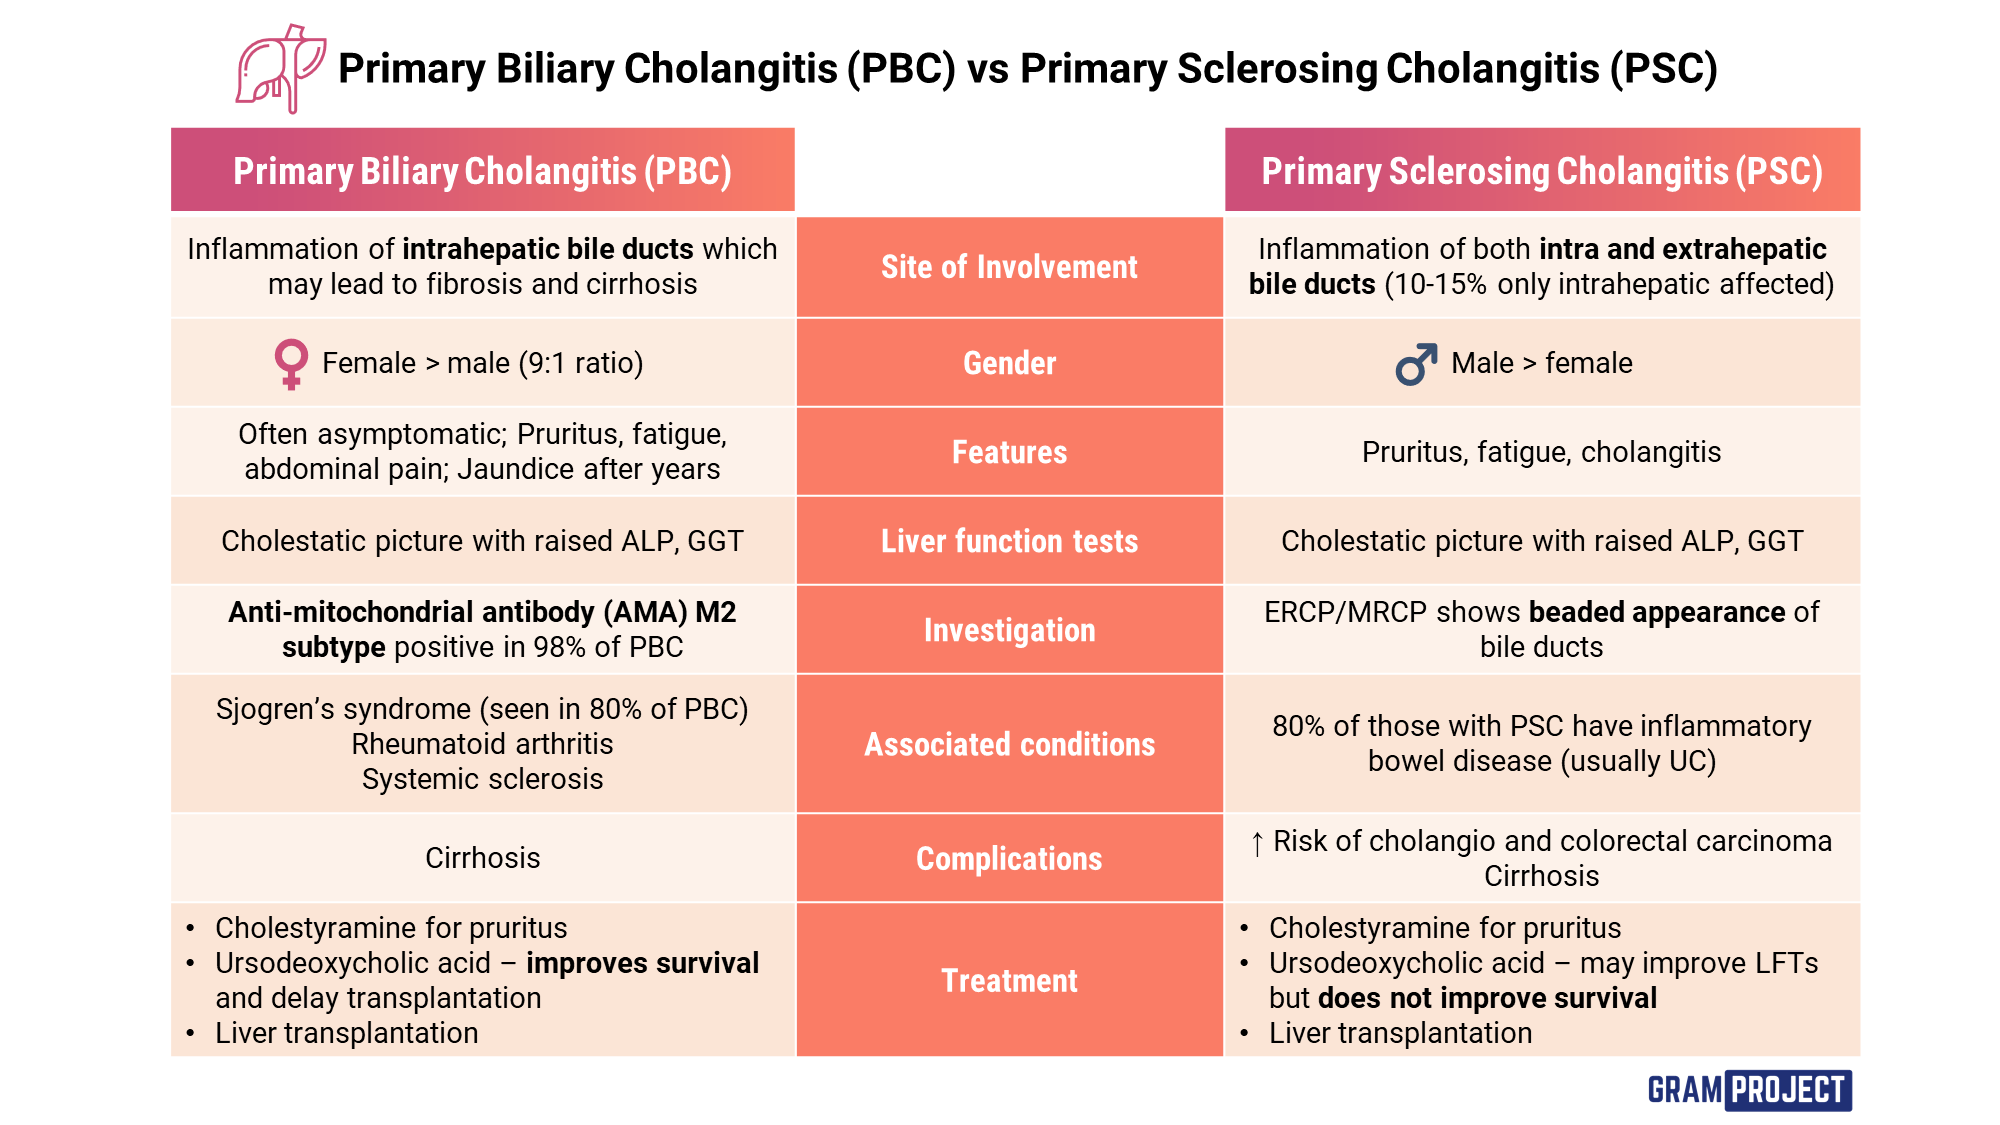 Table of comparison between primary biliary cholangitis (PBC) vs primary sclerosing cholangitis (PSC)